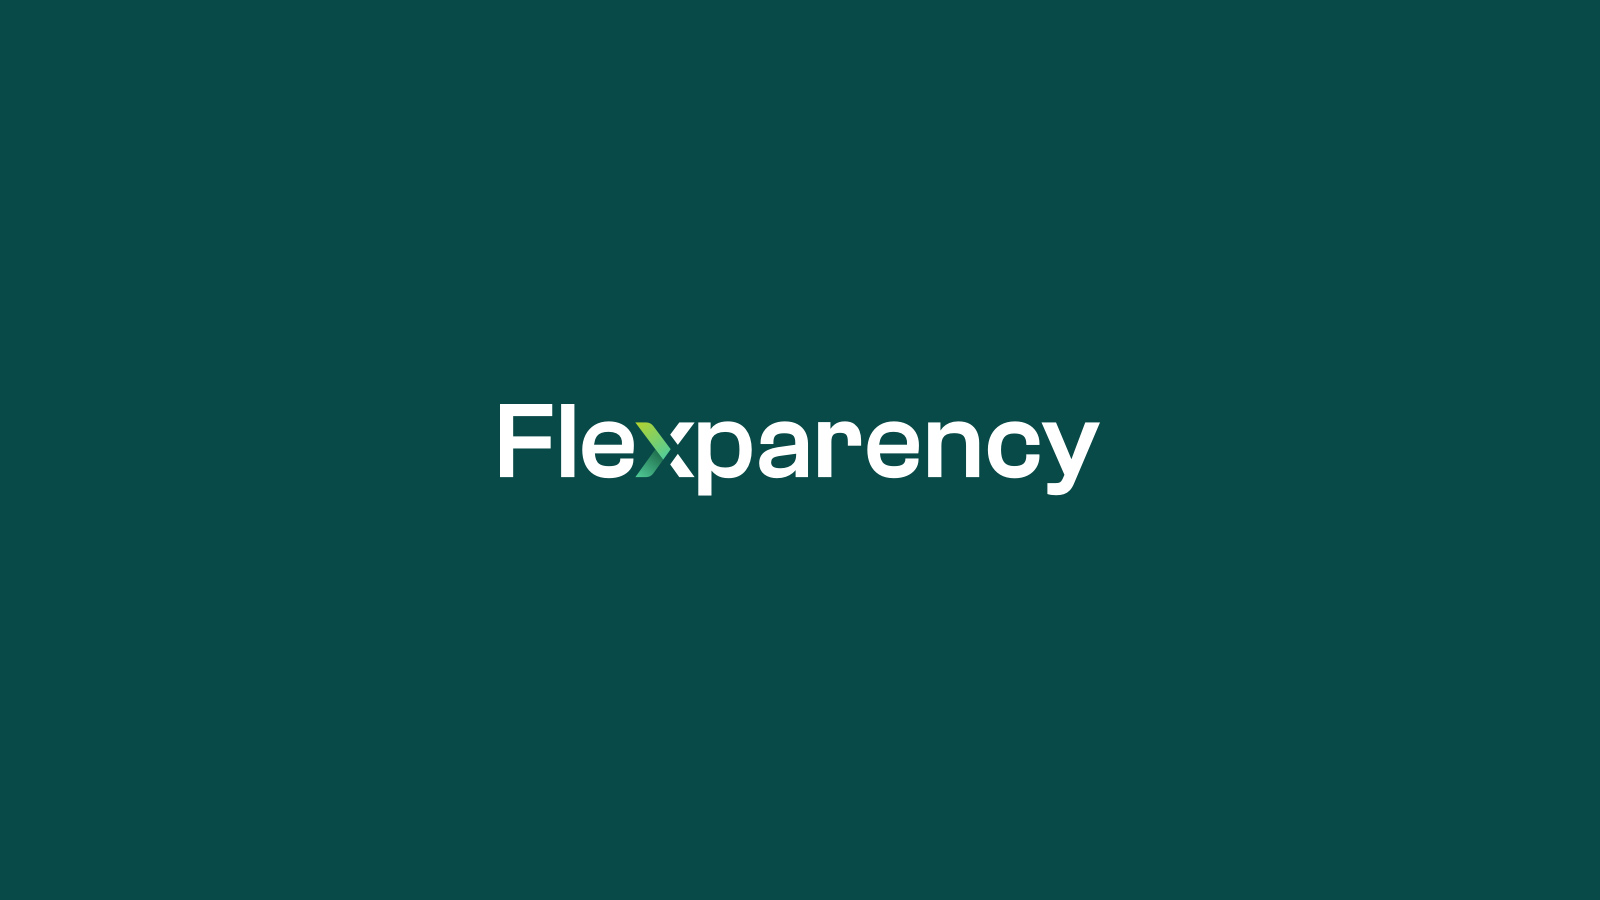 A modern, transparent brand identity for online service platform Flexparency